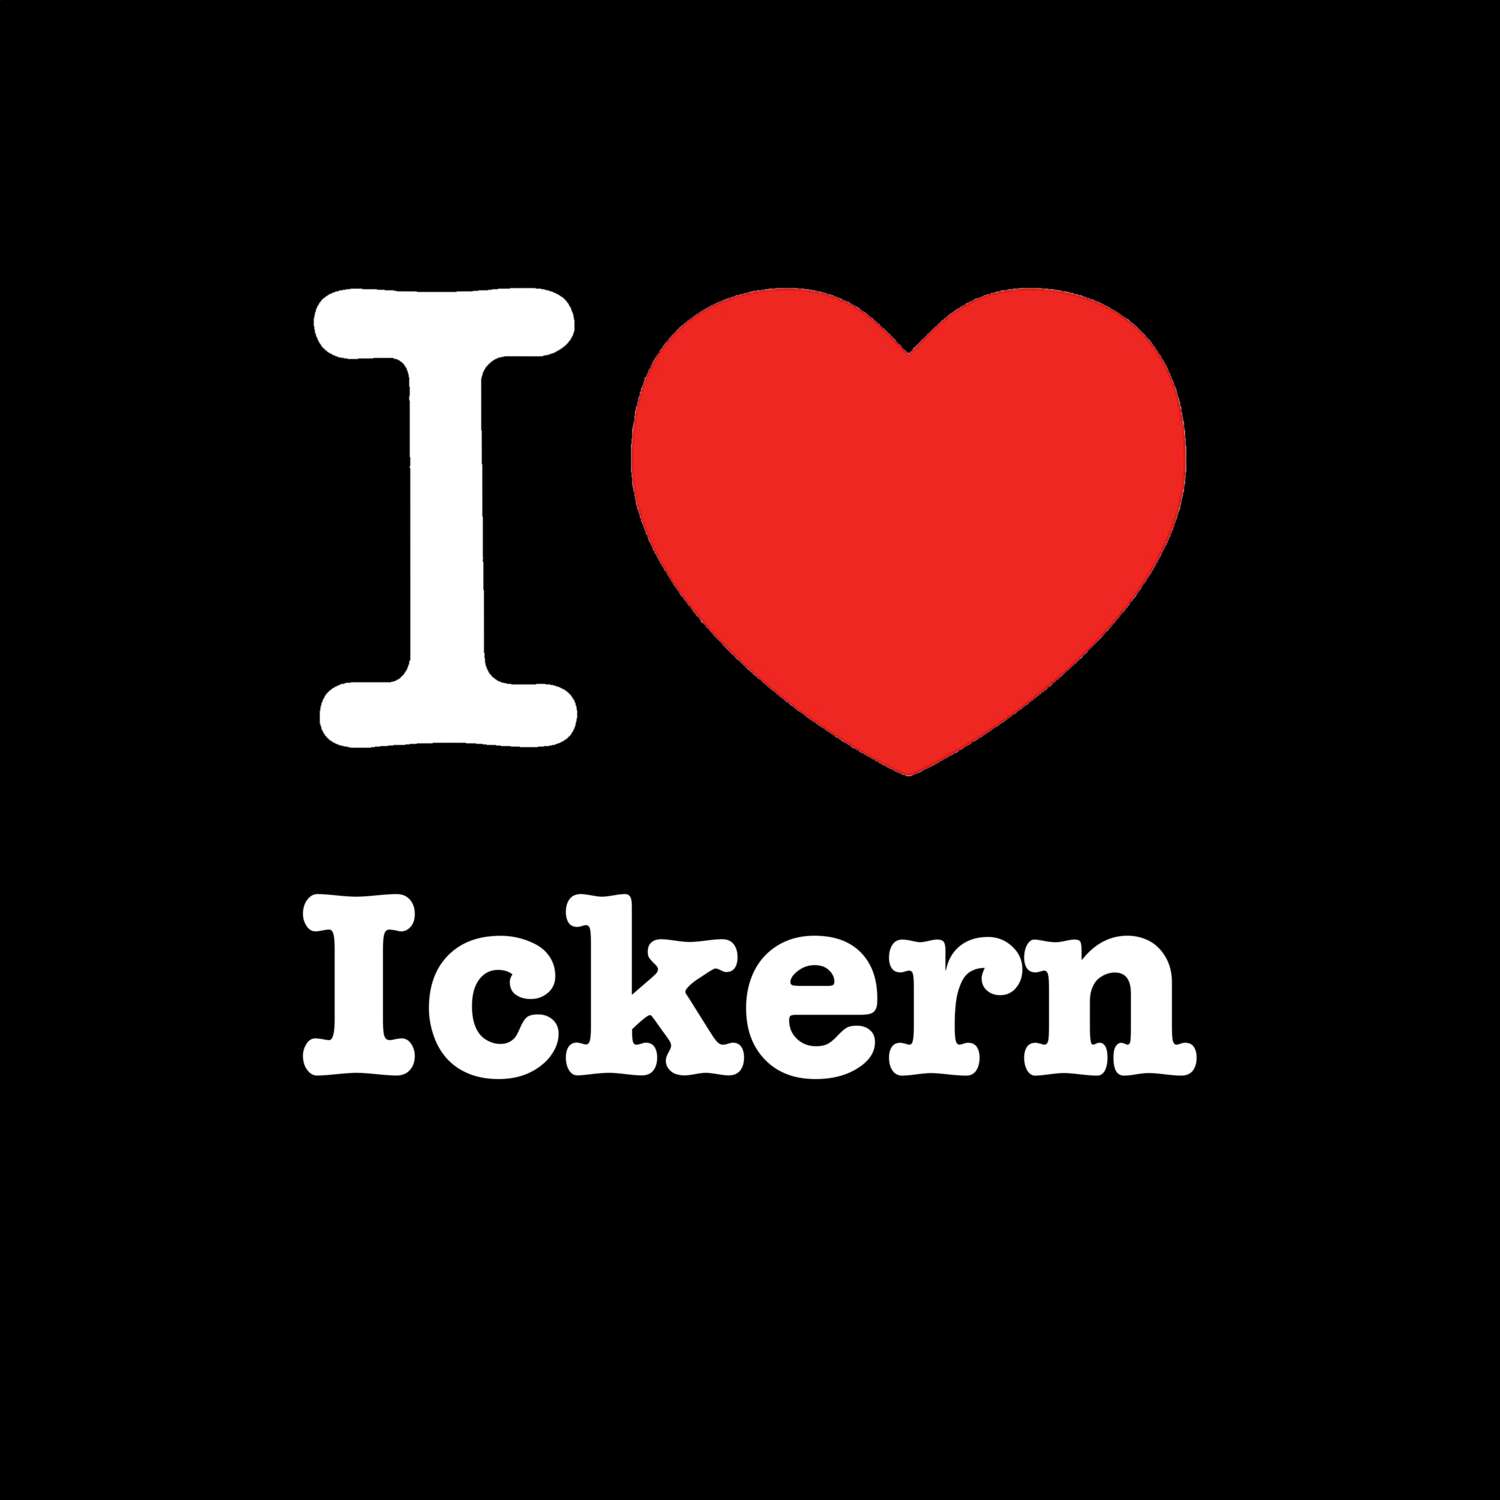 Ickern T-Shirt »I love«